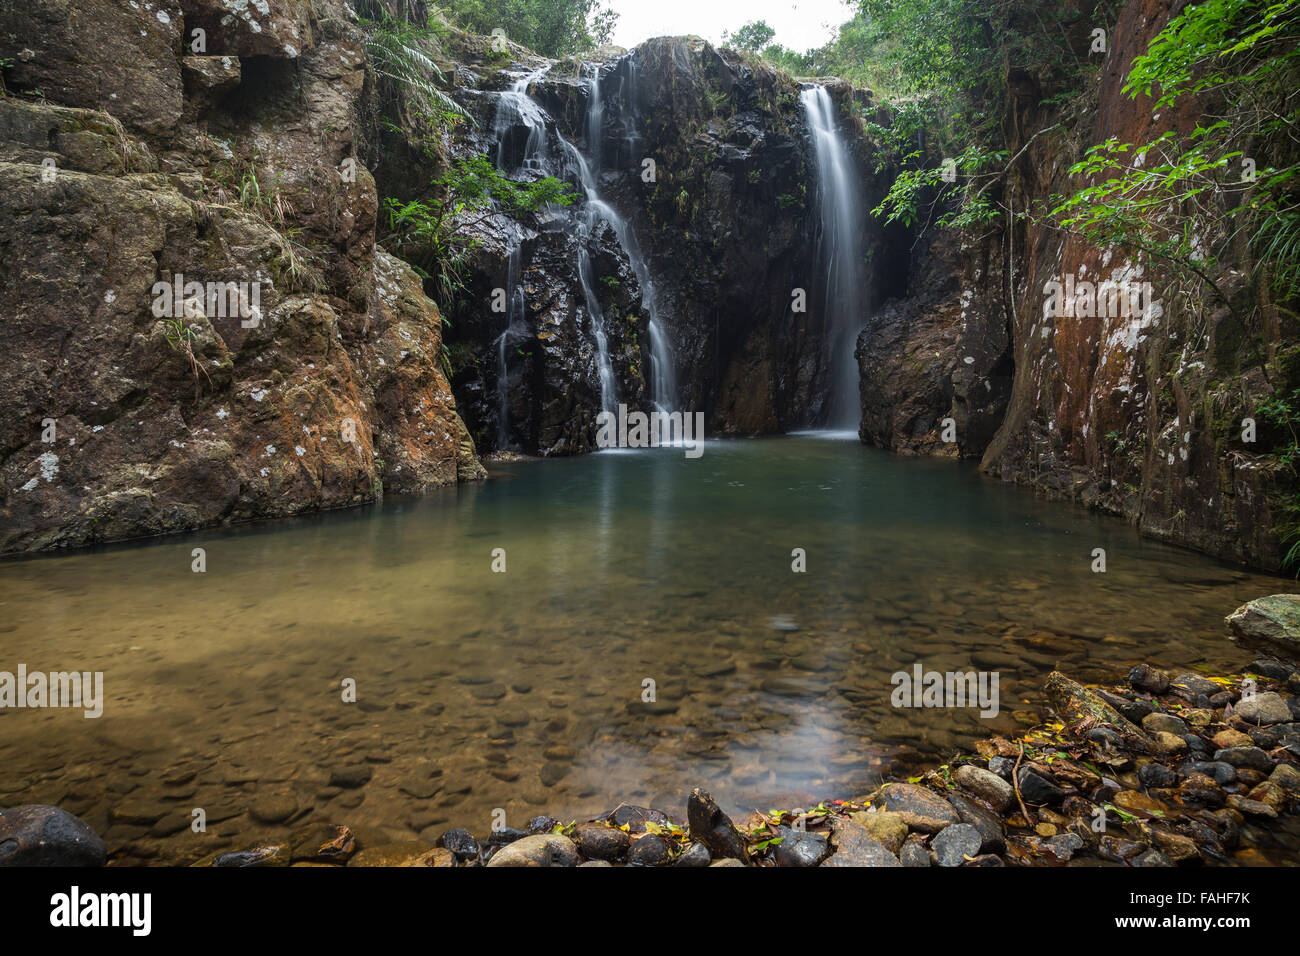 Tai Tam Mound Waterfall, pond and a small dam made of rocks in Hong Kong, China. Stock Photo